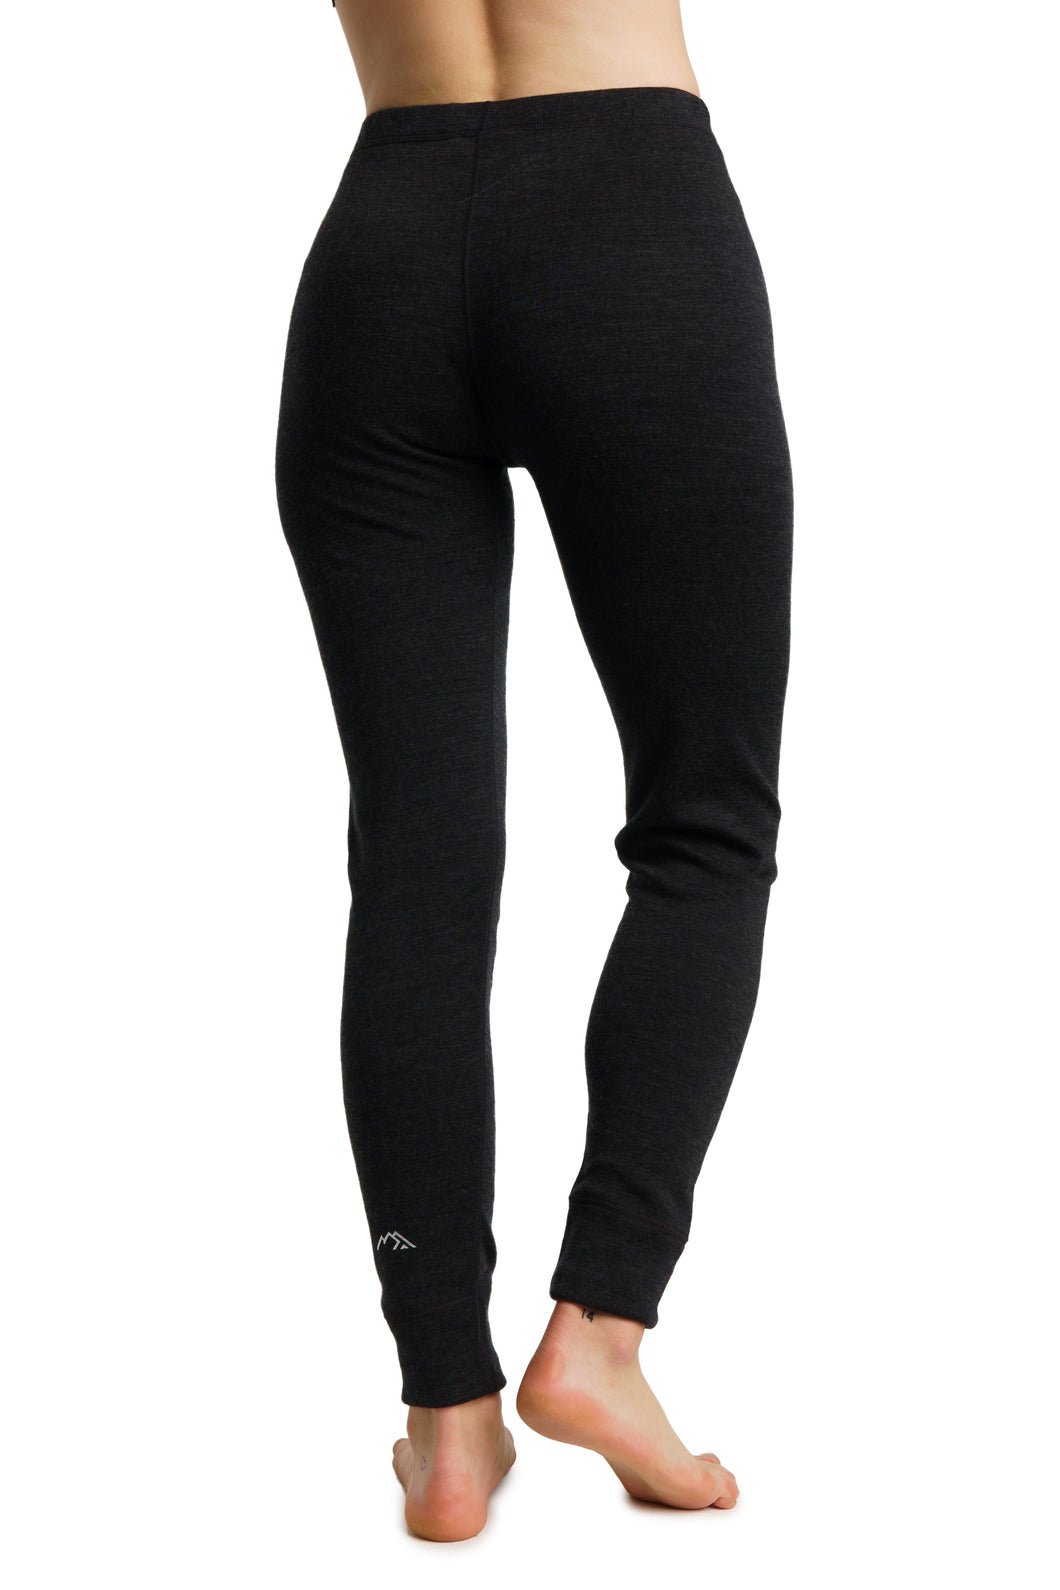 Women's Merino Pants 250 Charcoal Grey